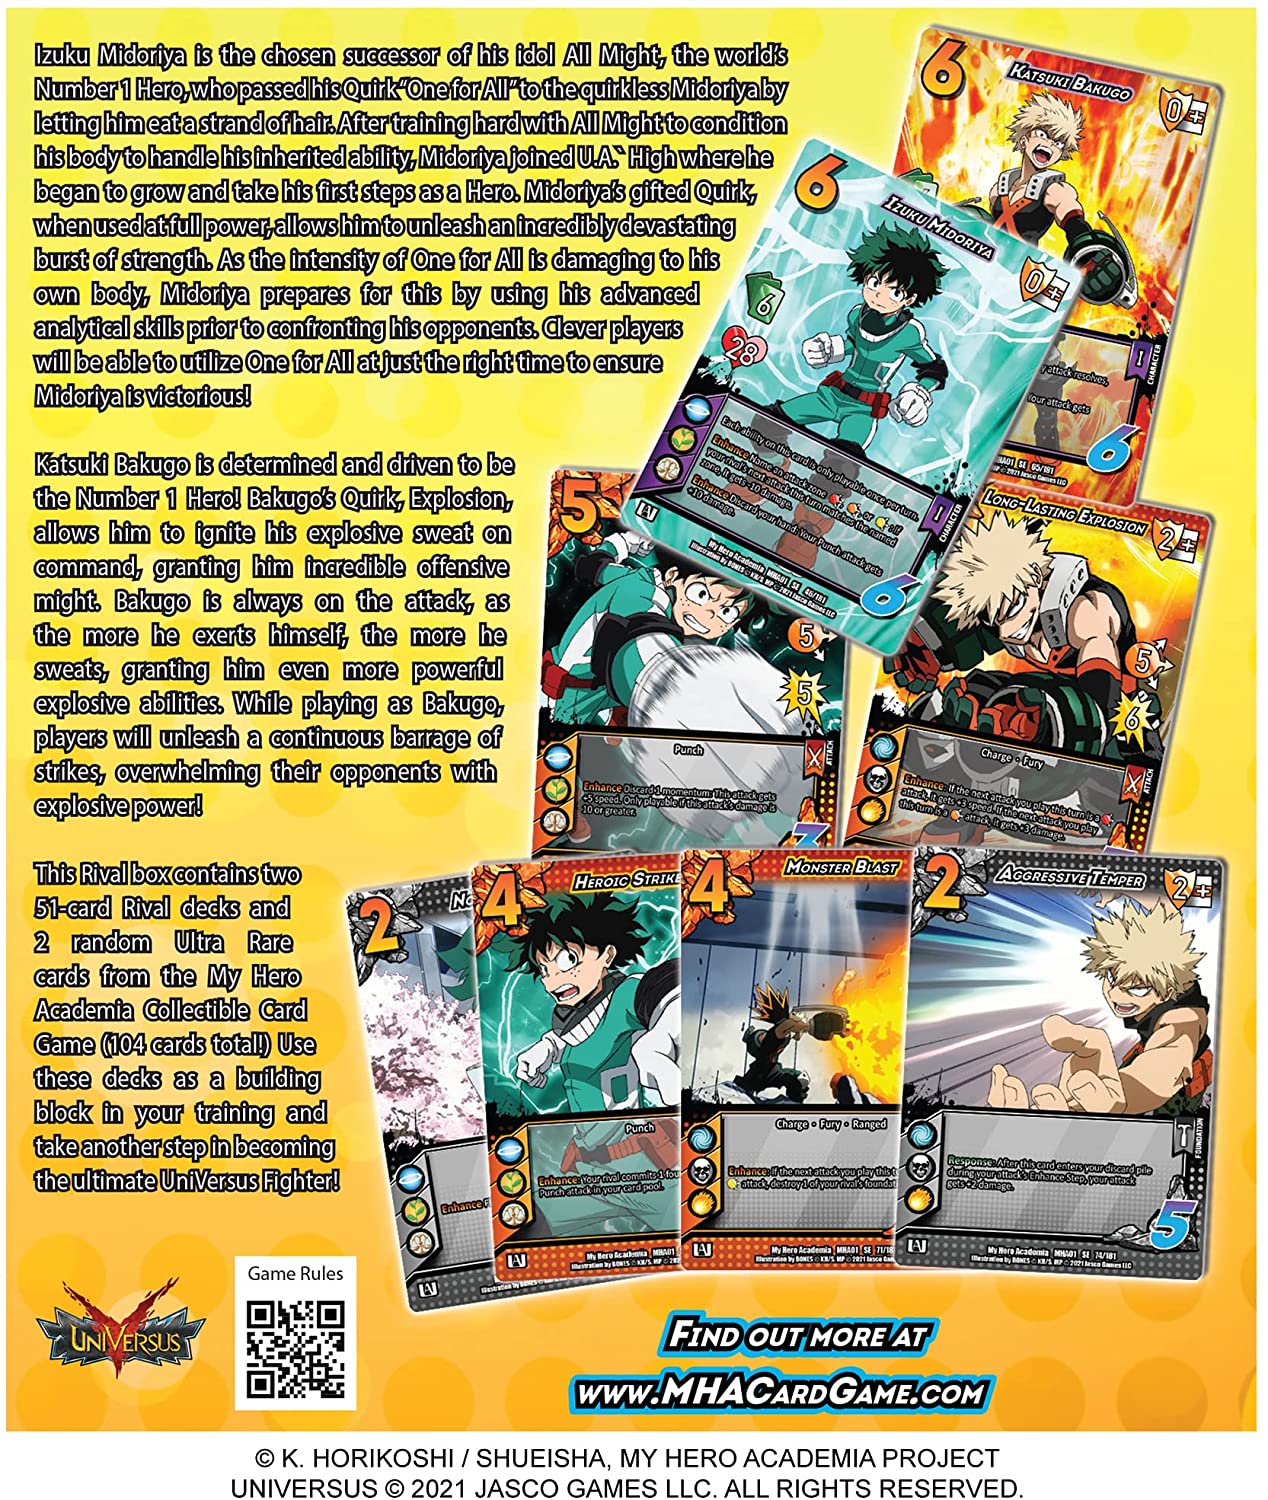 My Hero Academia Collectible Card Game - Izuku Midoriya vs. Katsuki Bakugo 2-Play Rival Decks